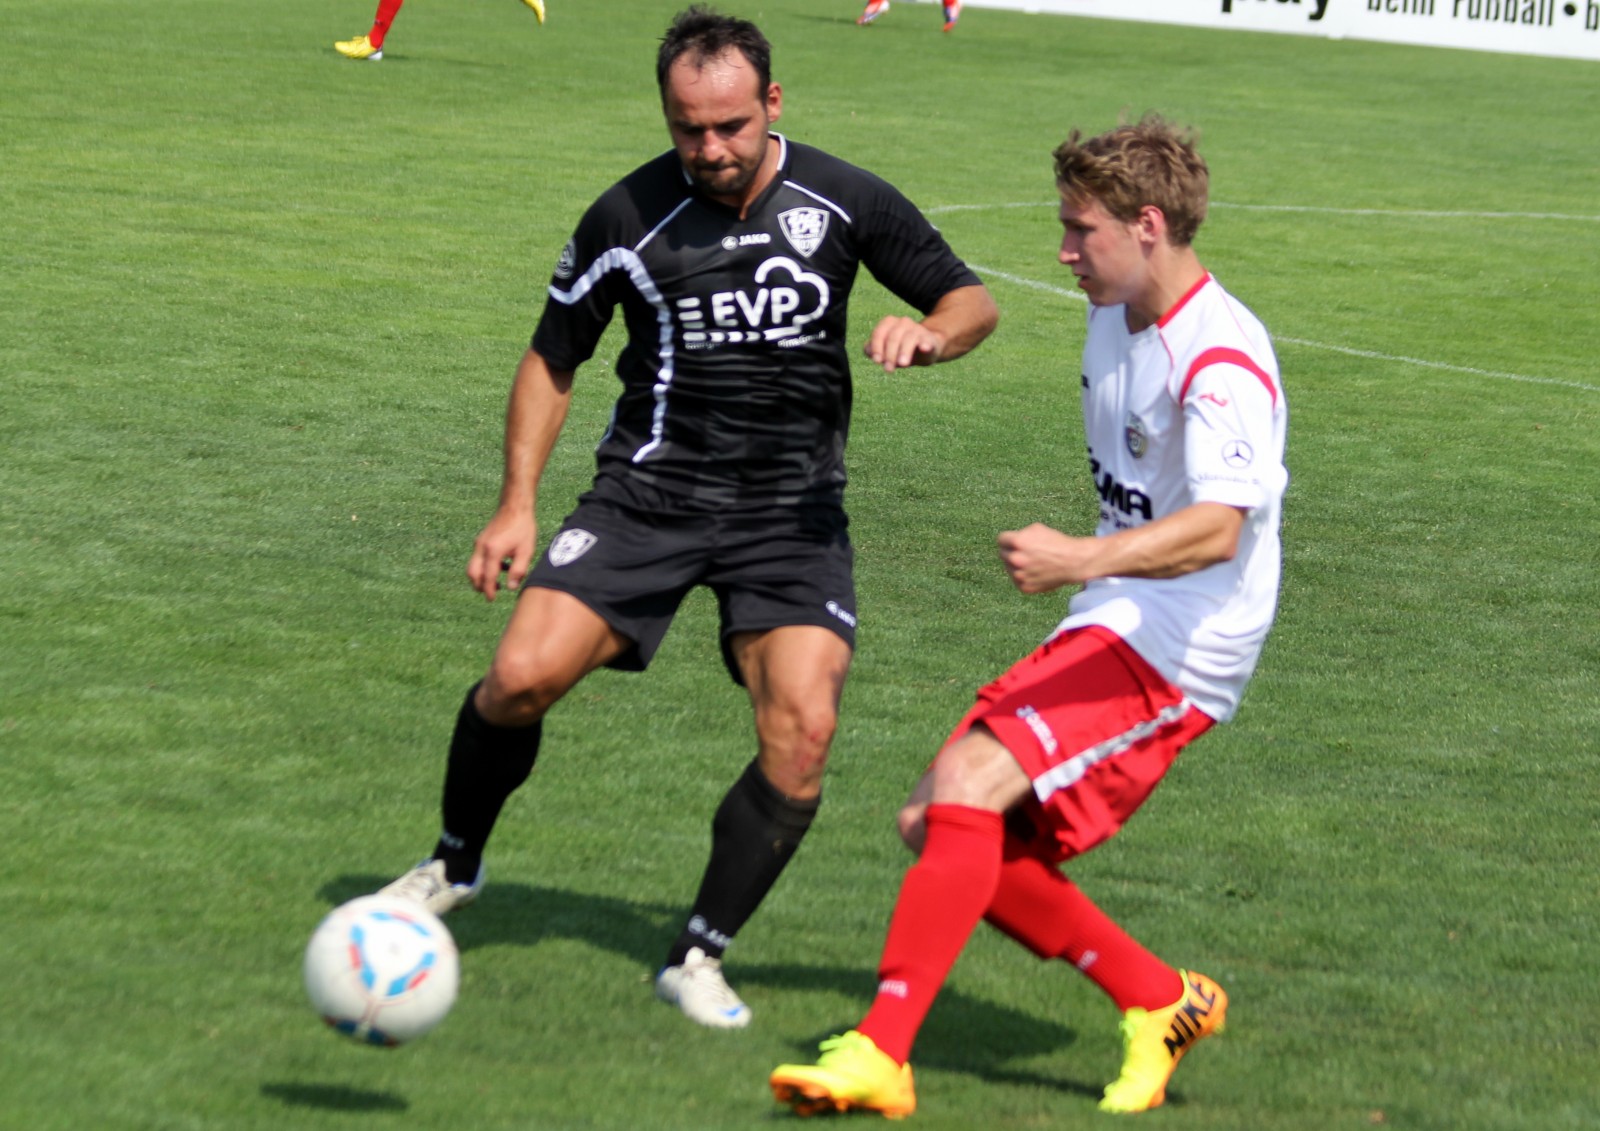 VfL-Spieler Adis Islamovic geht entschlossen zum Ball. Foto: Karsten Hannover/Grimma